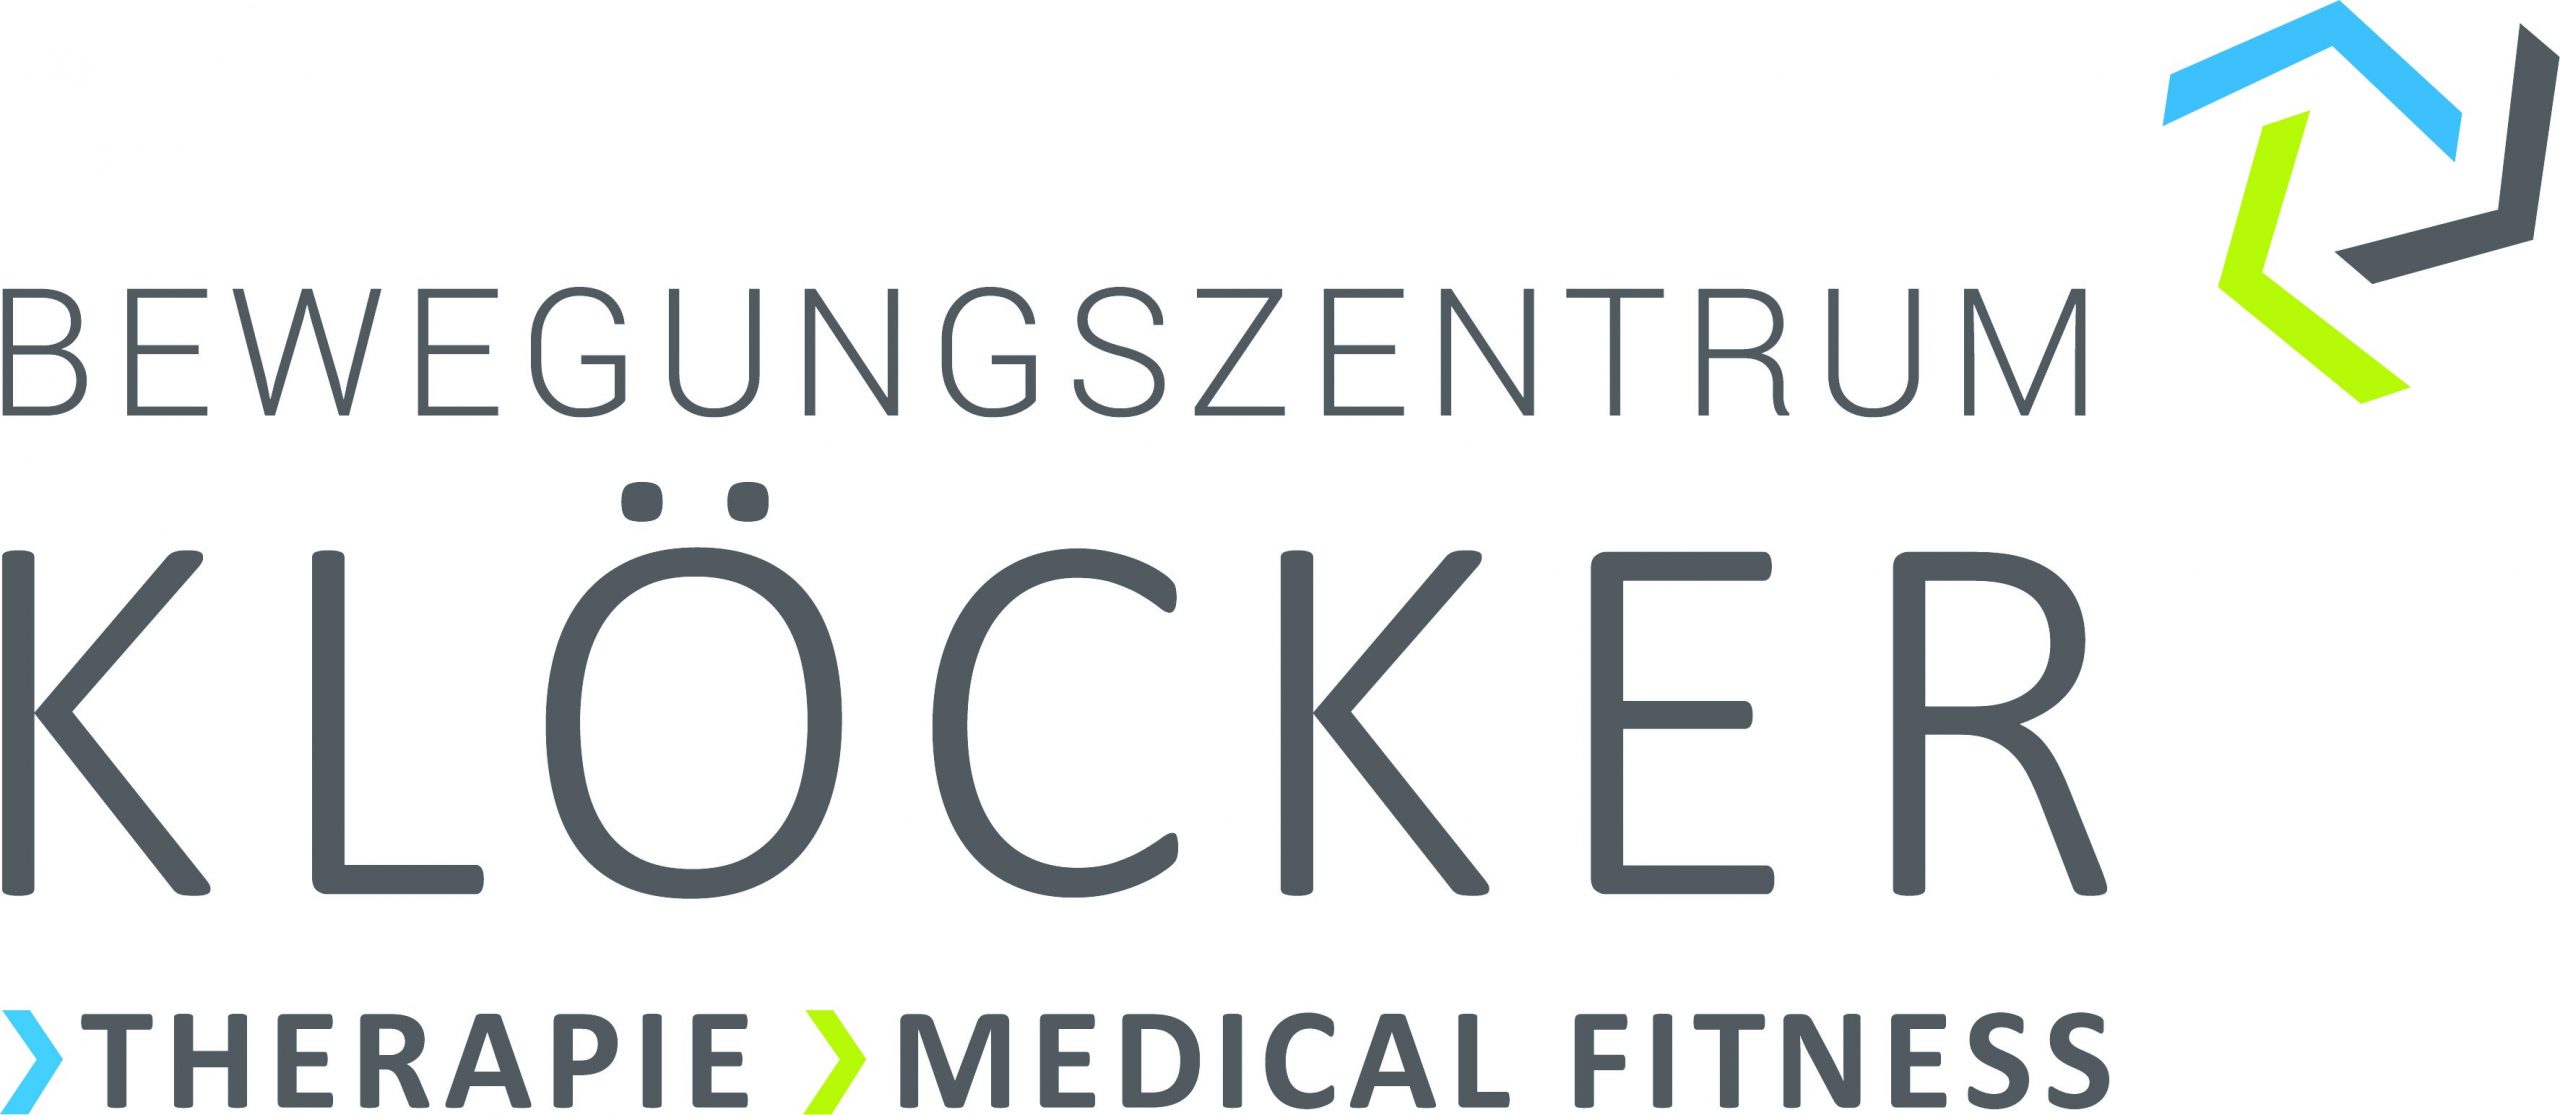  Bewegungszentrum Klöcker Logo